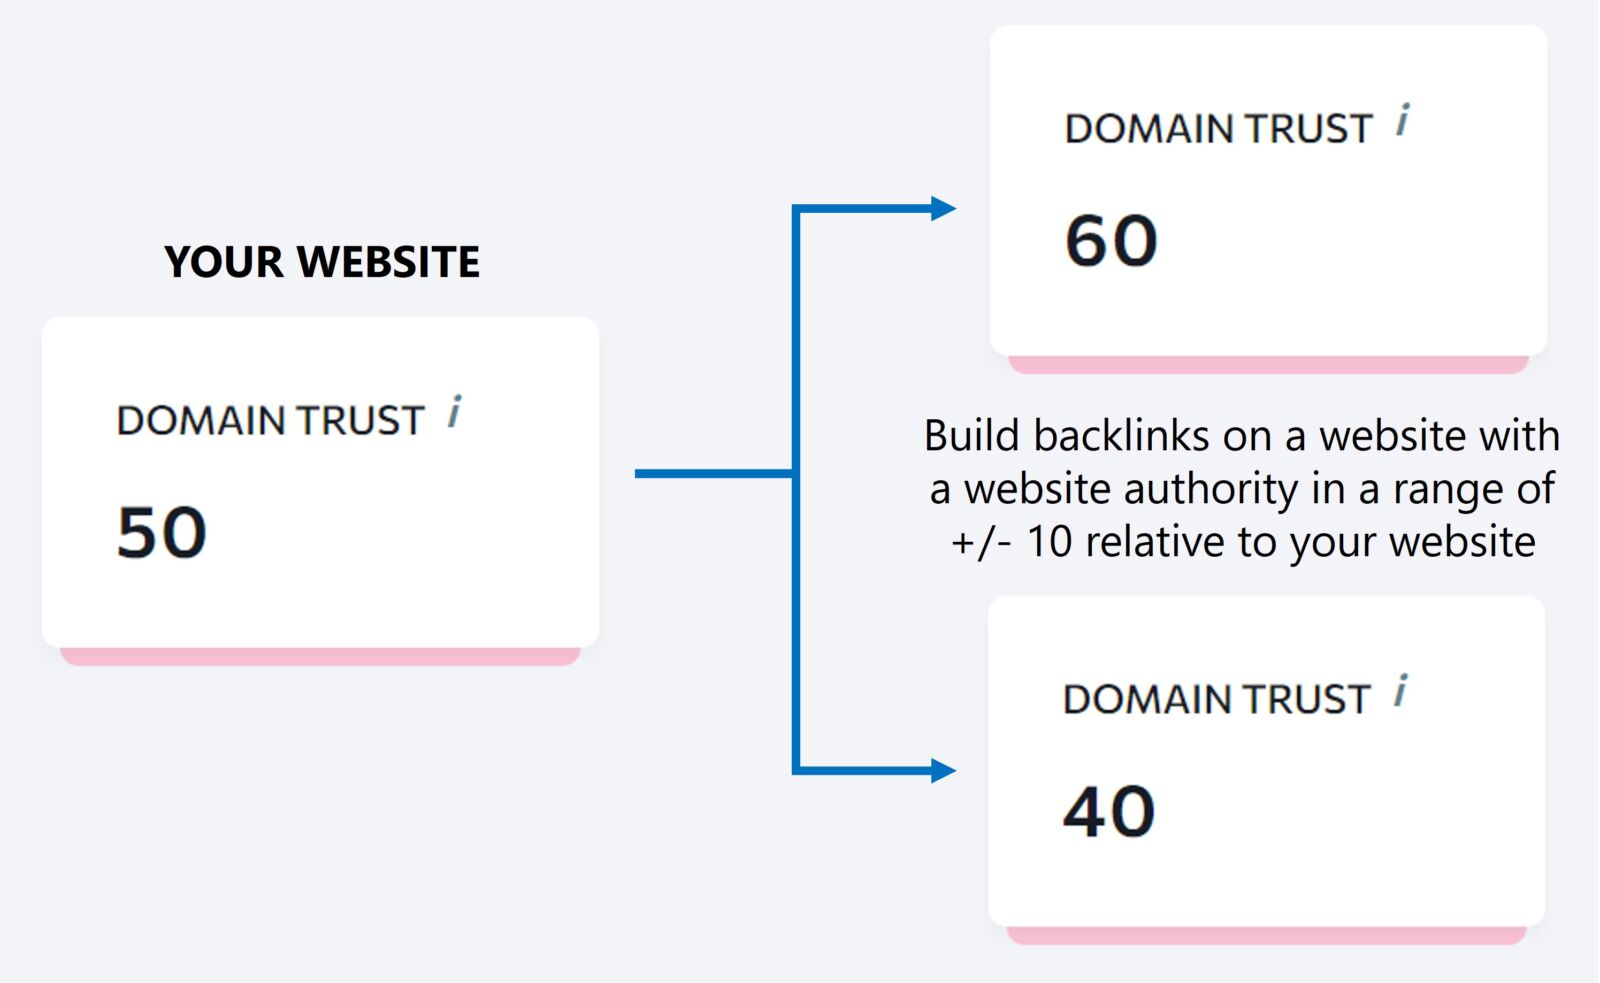 website authority range relative to your website when building backlinks